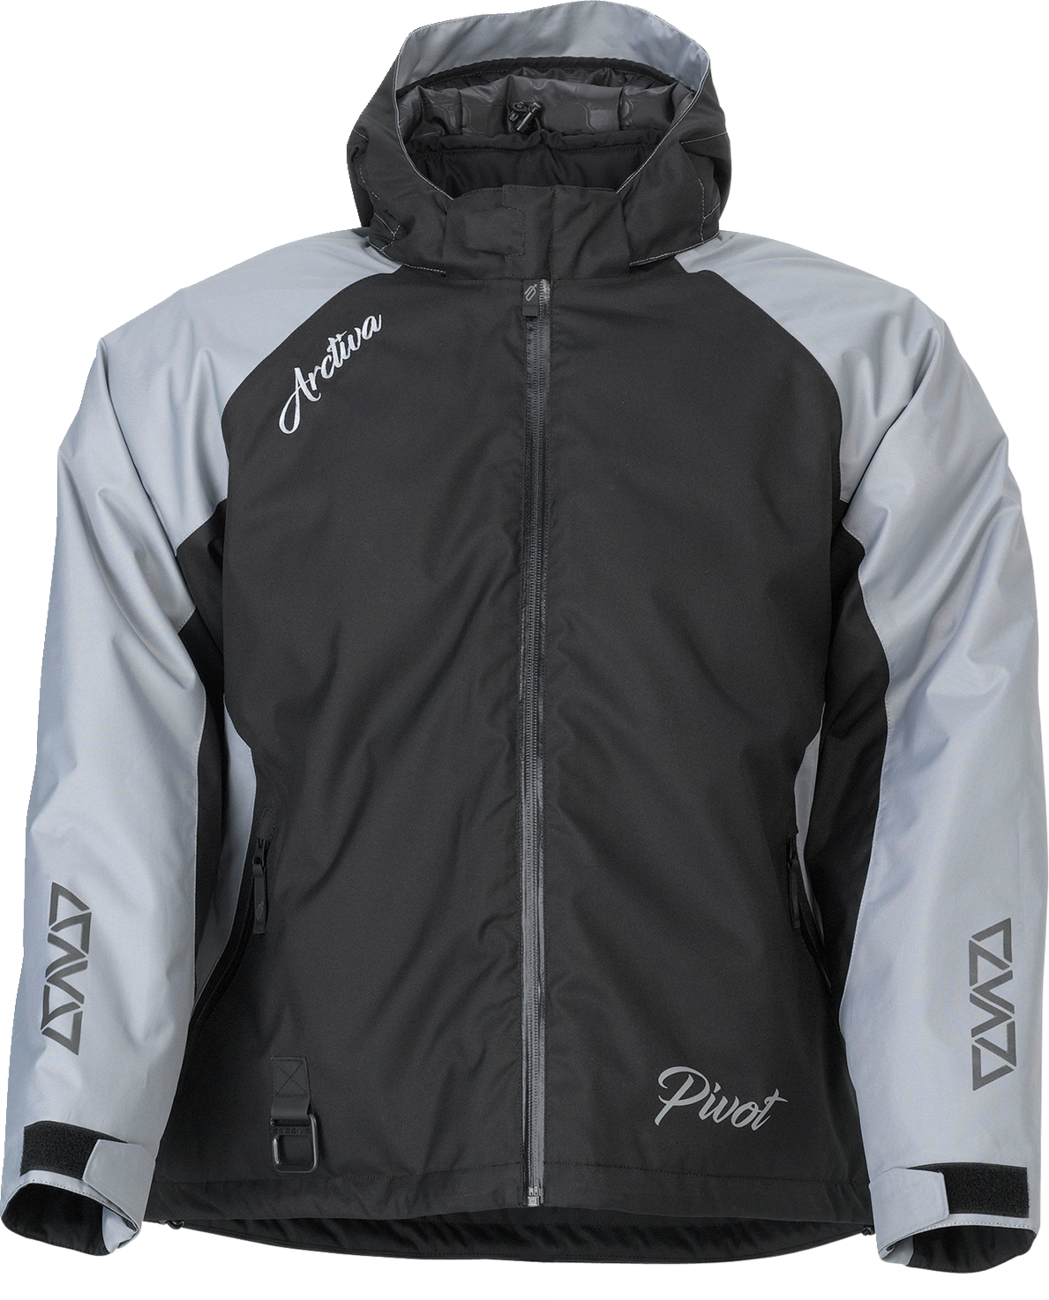 ARCTIVA Women's Pivot 5 Hooded Jacket - Gray - Medium 3121-0804